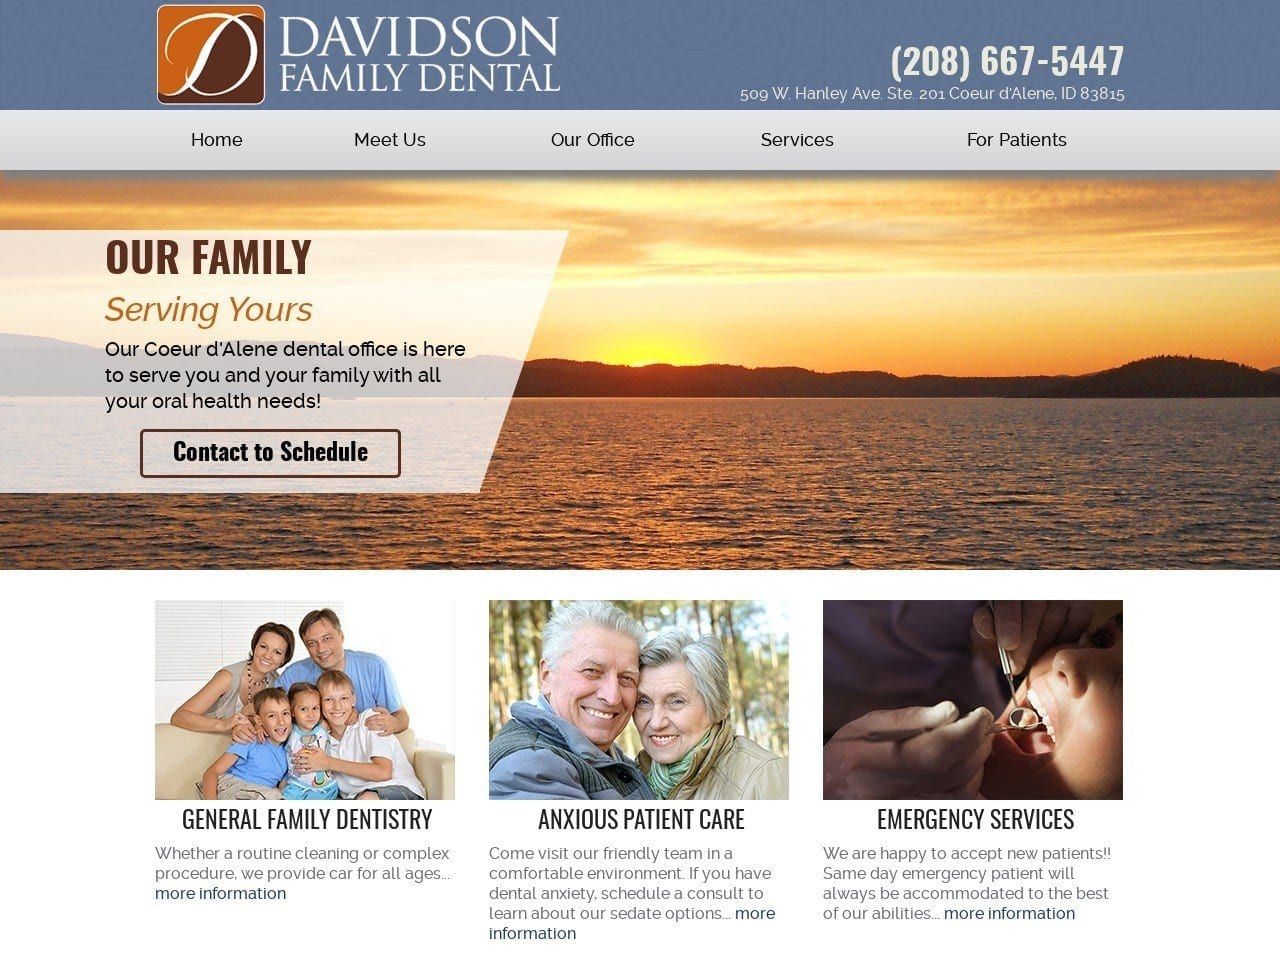 Davidson Family Dentistry Davidson Daniel B DMD Website Screenshot from davidsonfamilydental.com